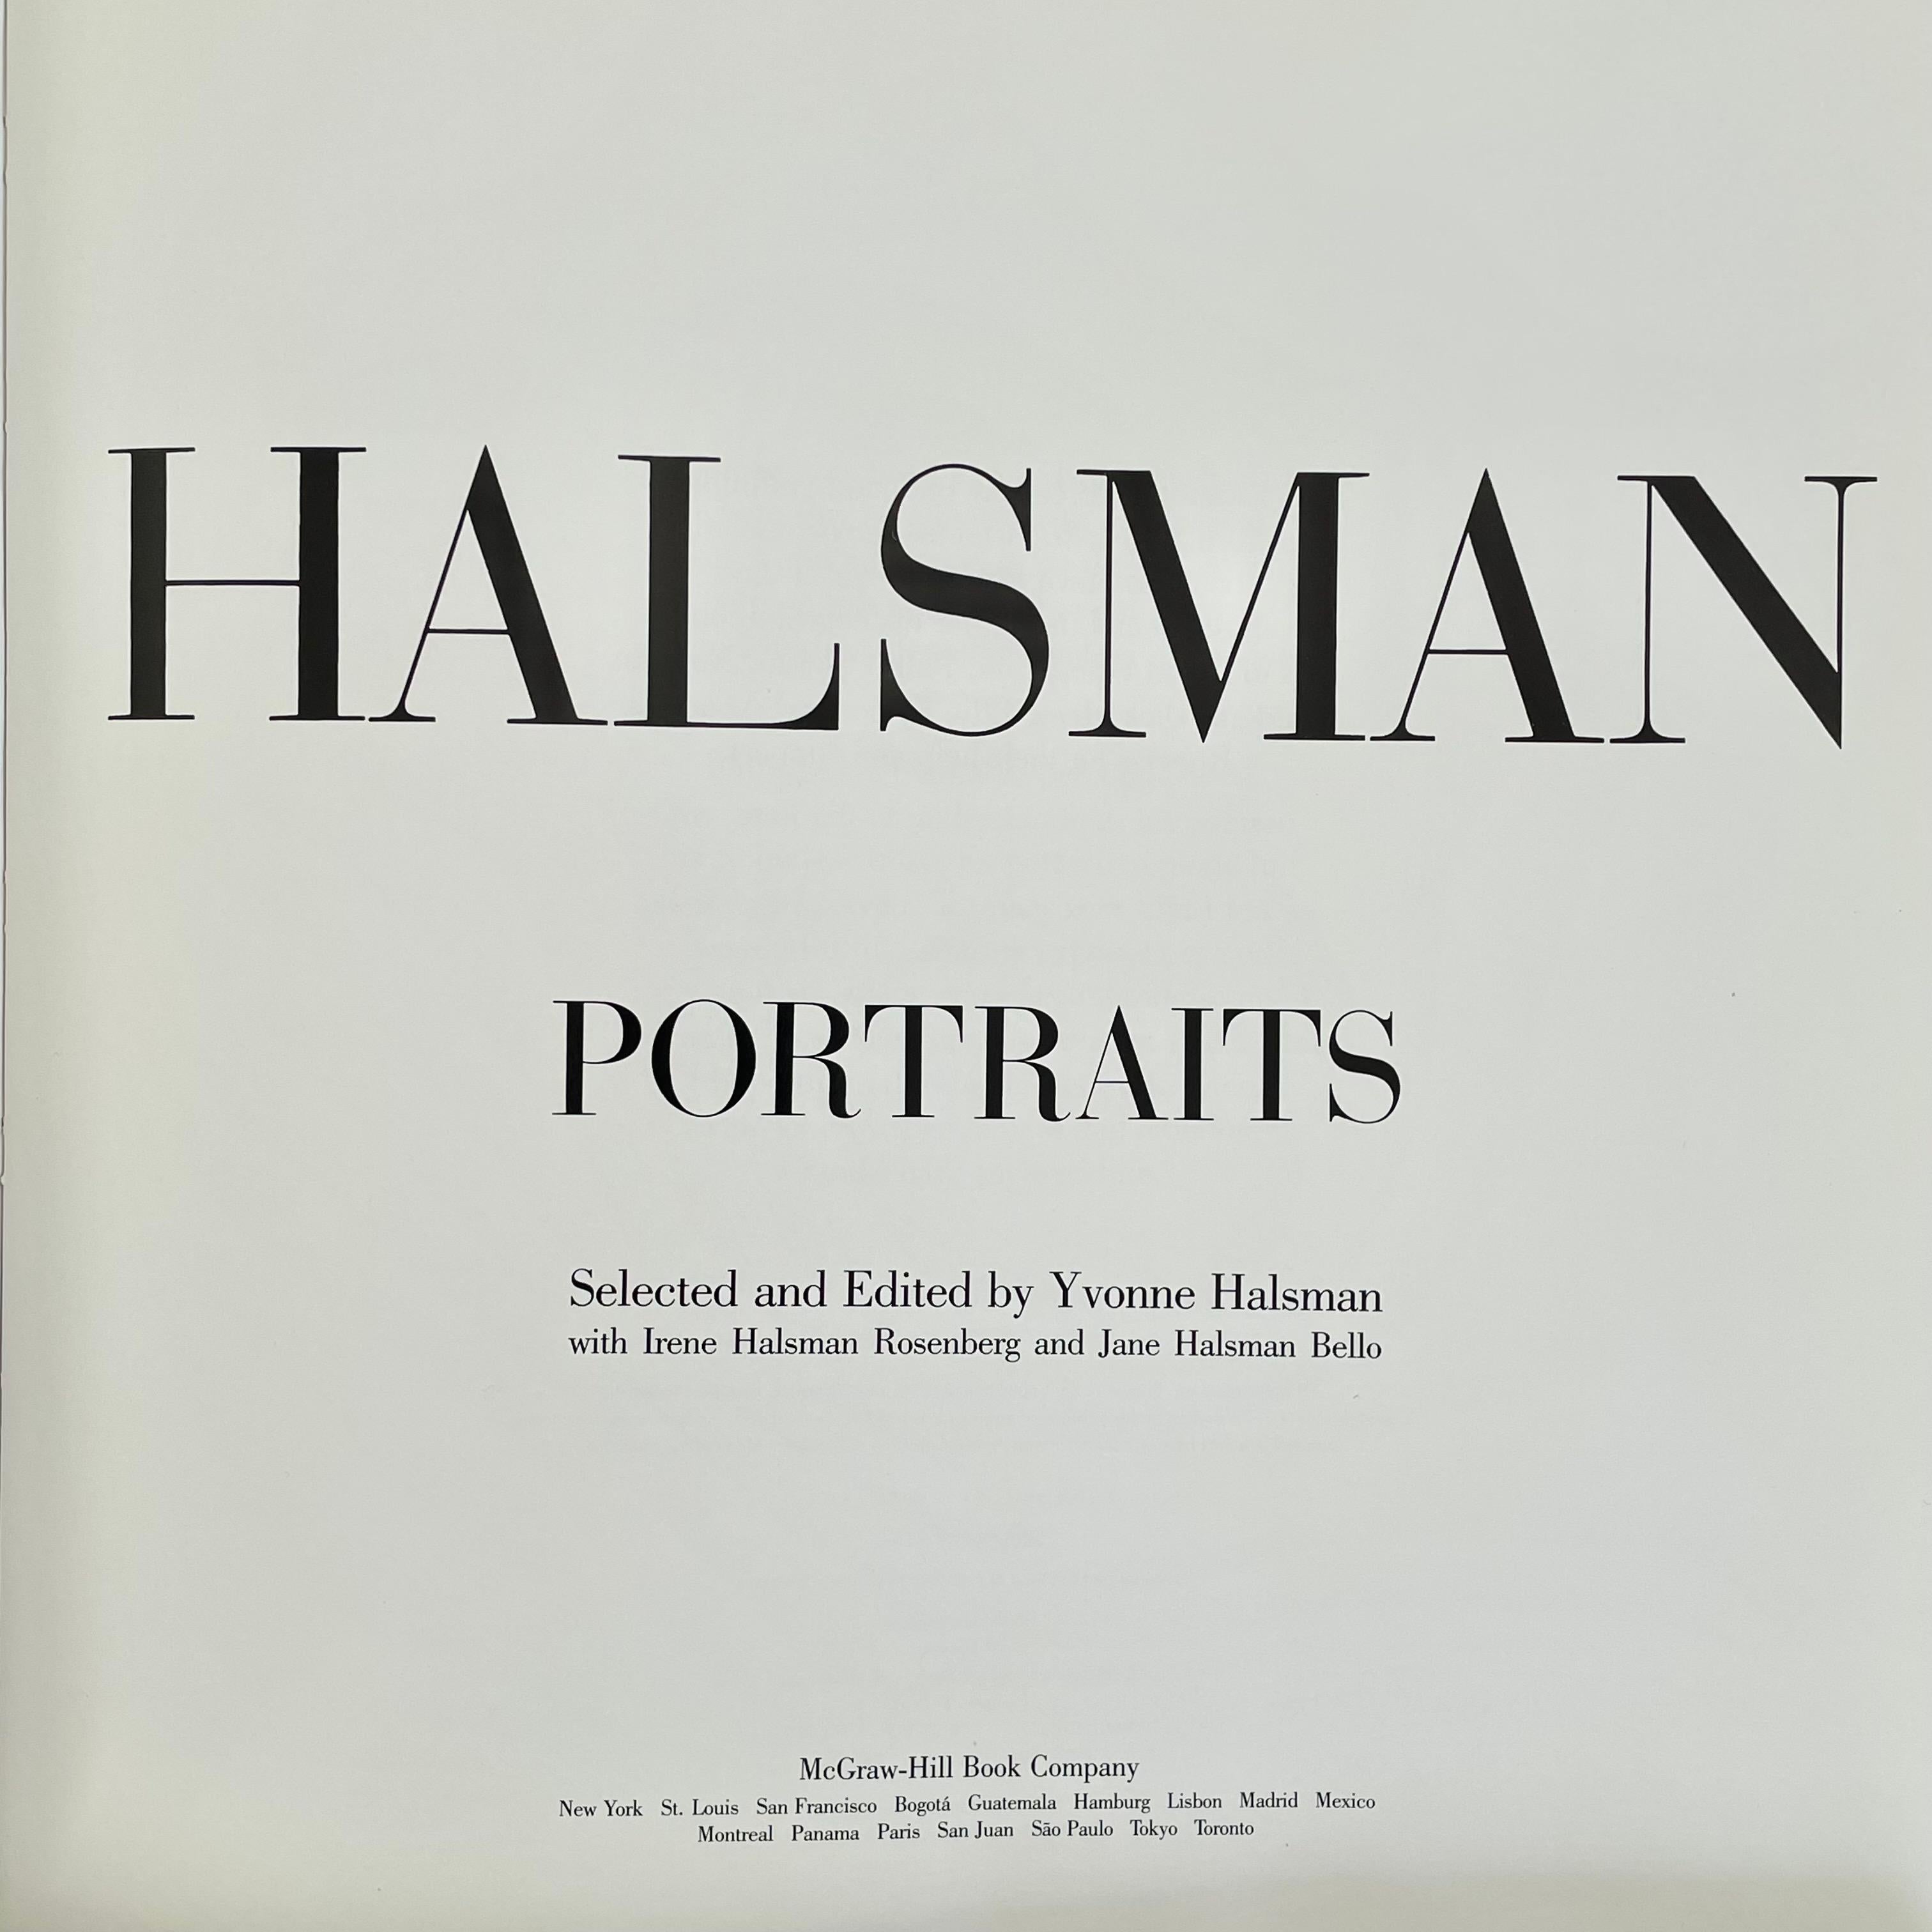 Portraits by Halsman Hardcover Book 7